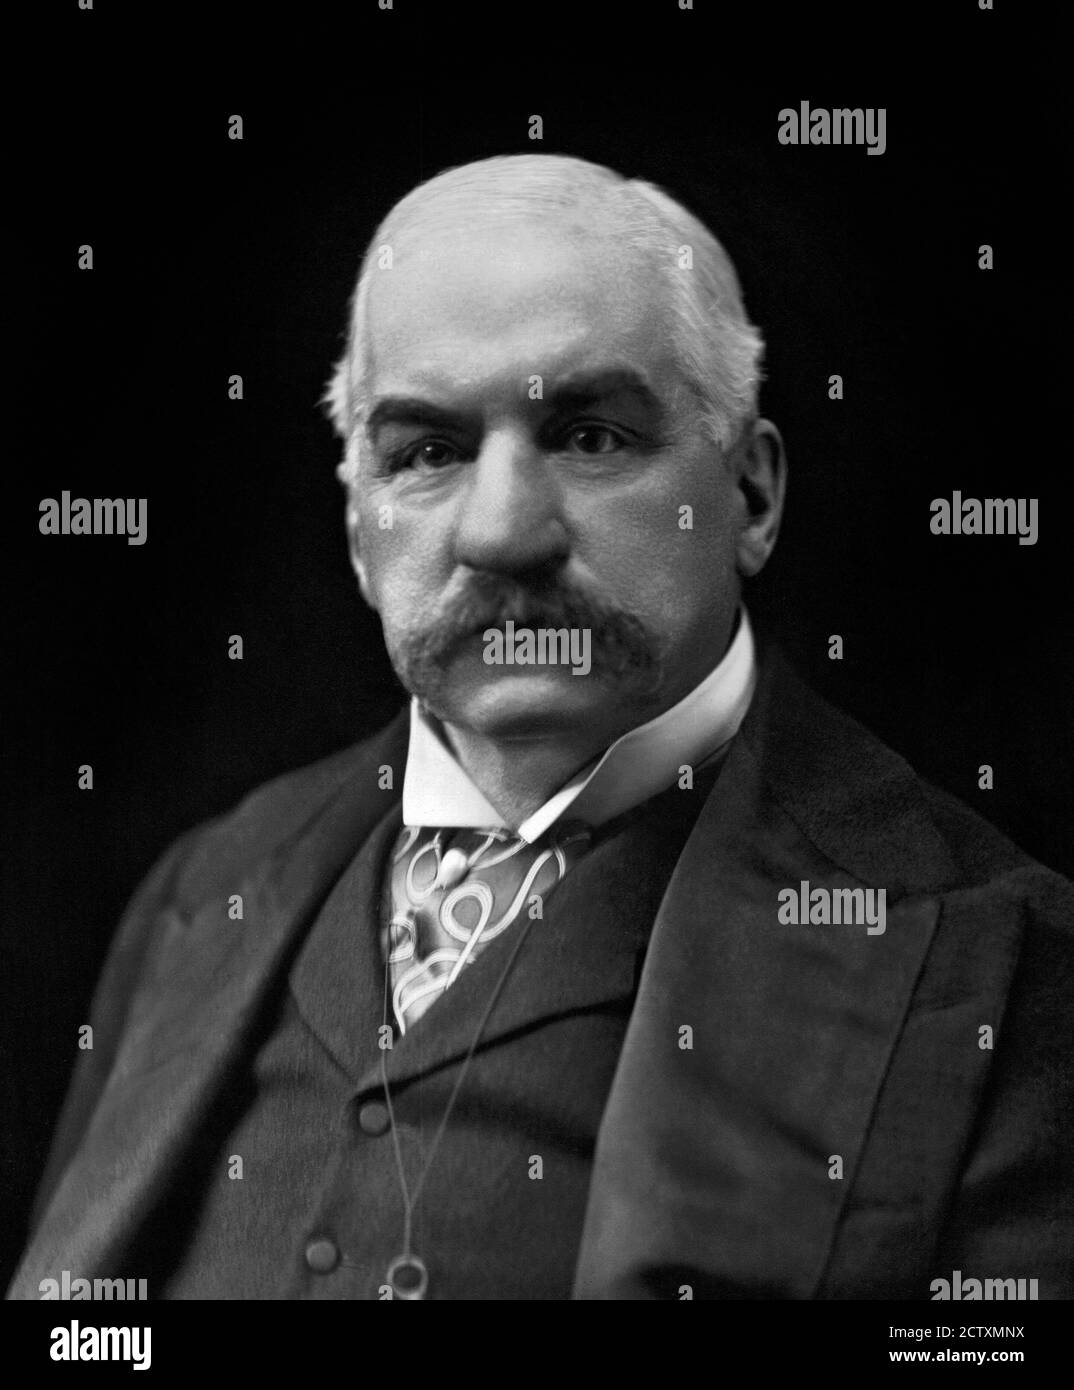 J. P. Morgan. Portrait of the American banker and financier, John Pierpont Morgan Sr. (1837-1913), c.1903 Stock Photo